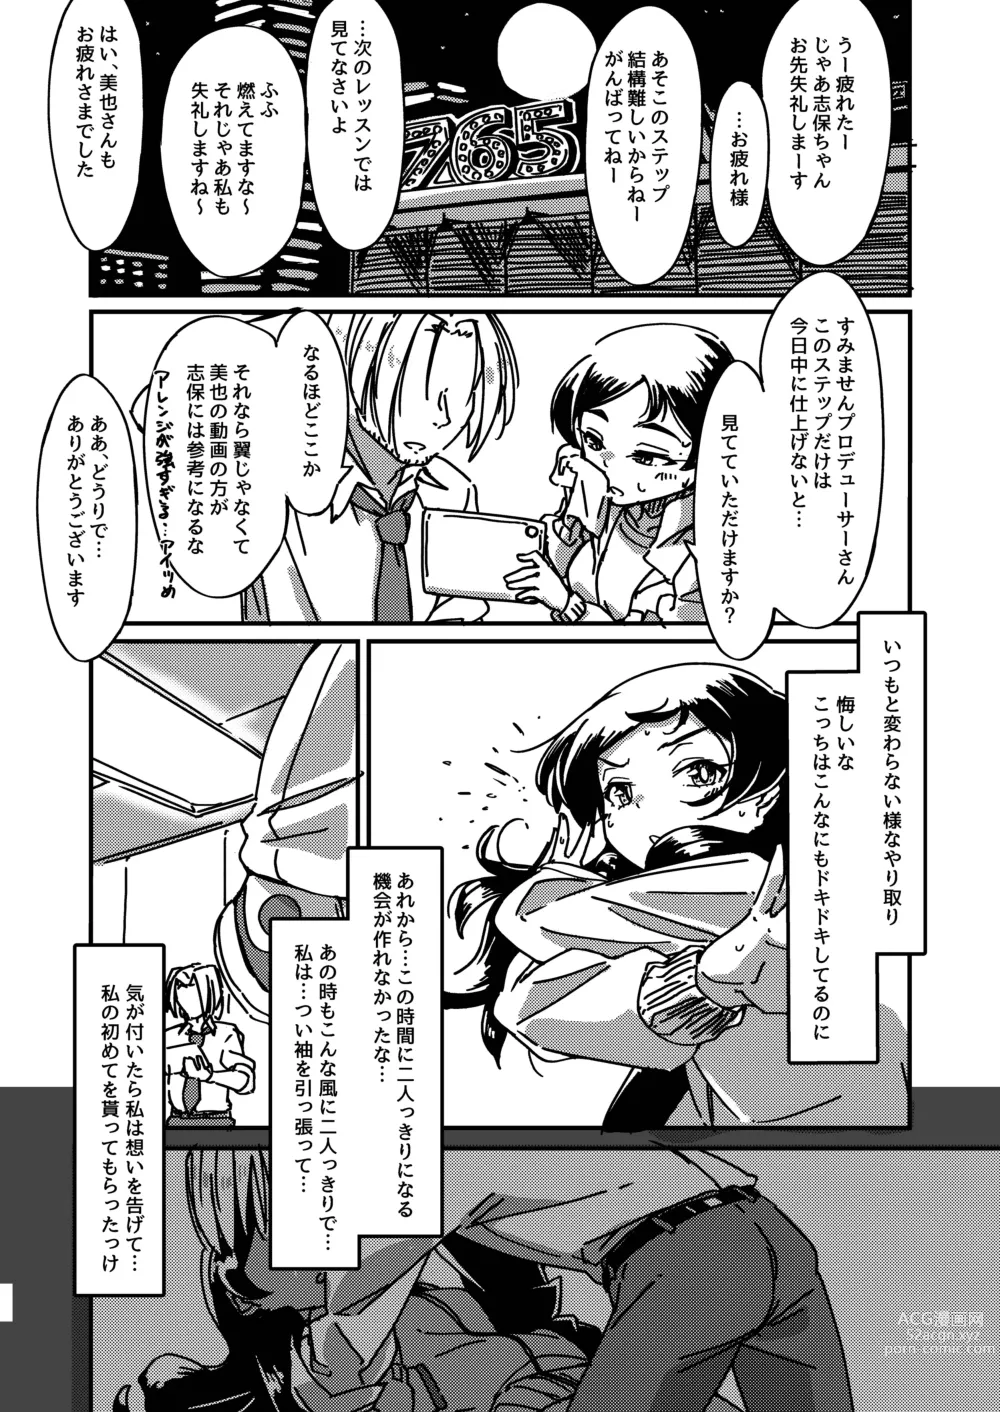 Page 7 of doujinshi Kuroneko no Kyouji + Aruhi no Kuro Usagi